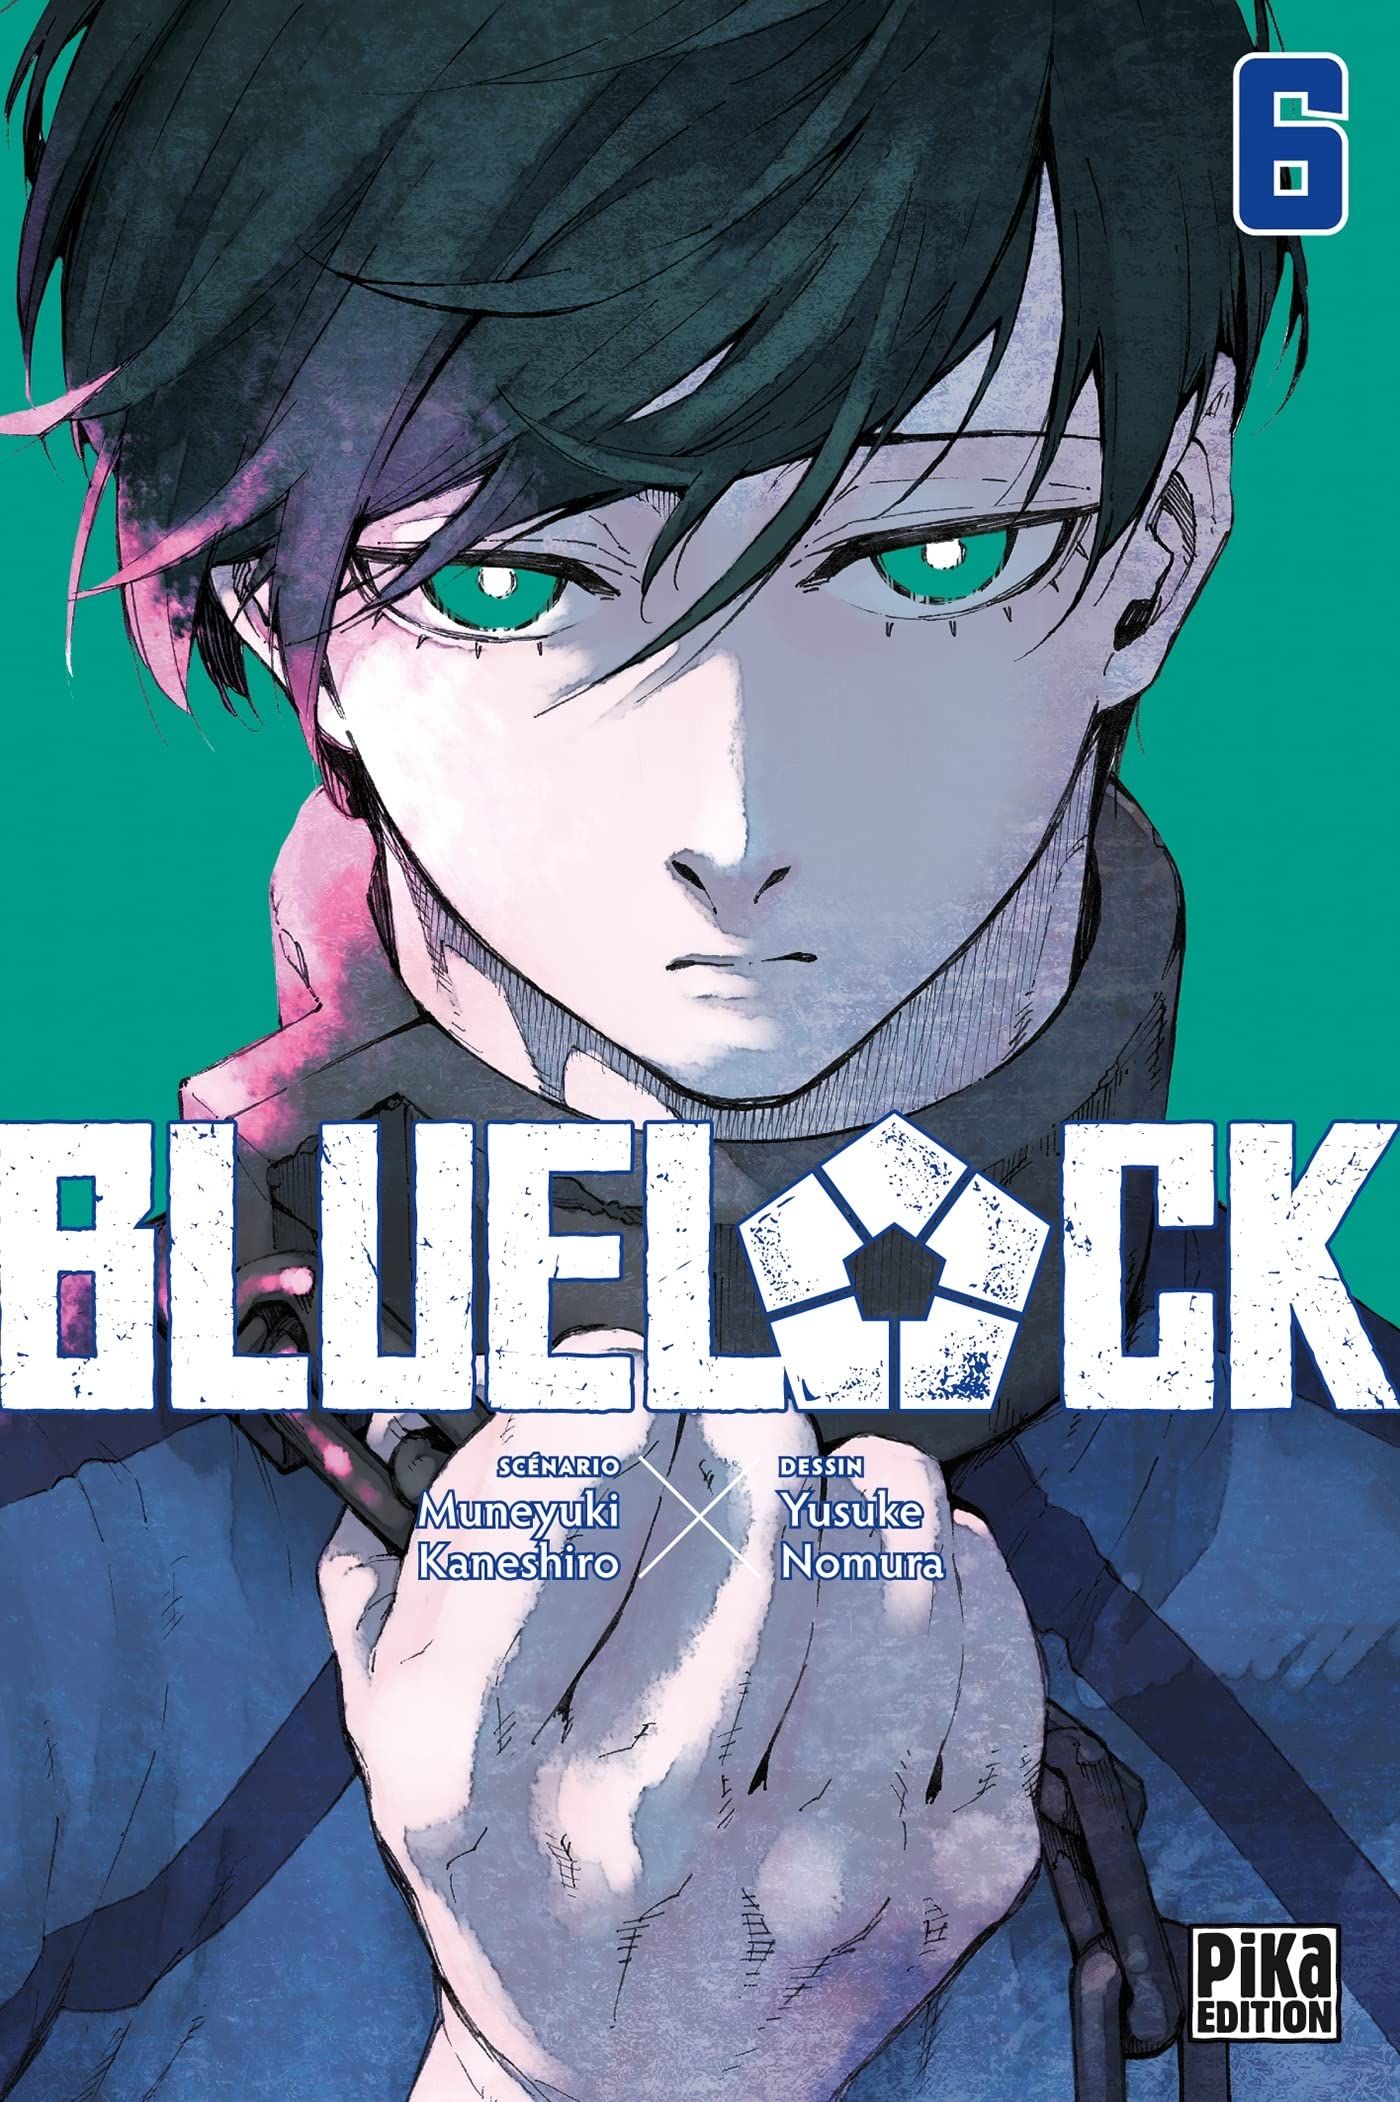 Blue Lock 6